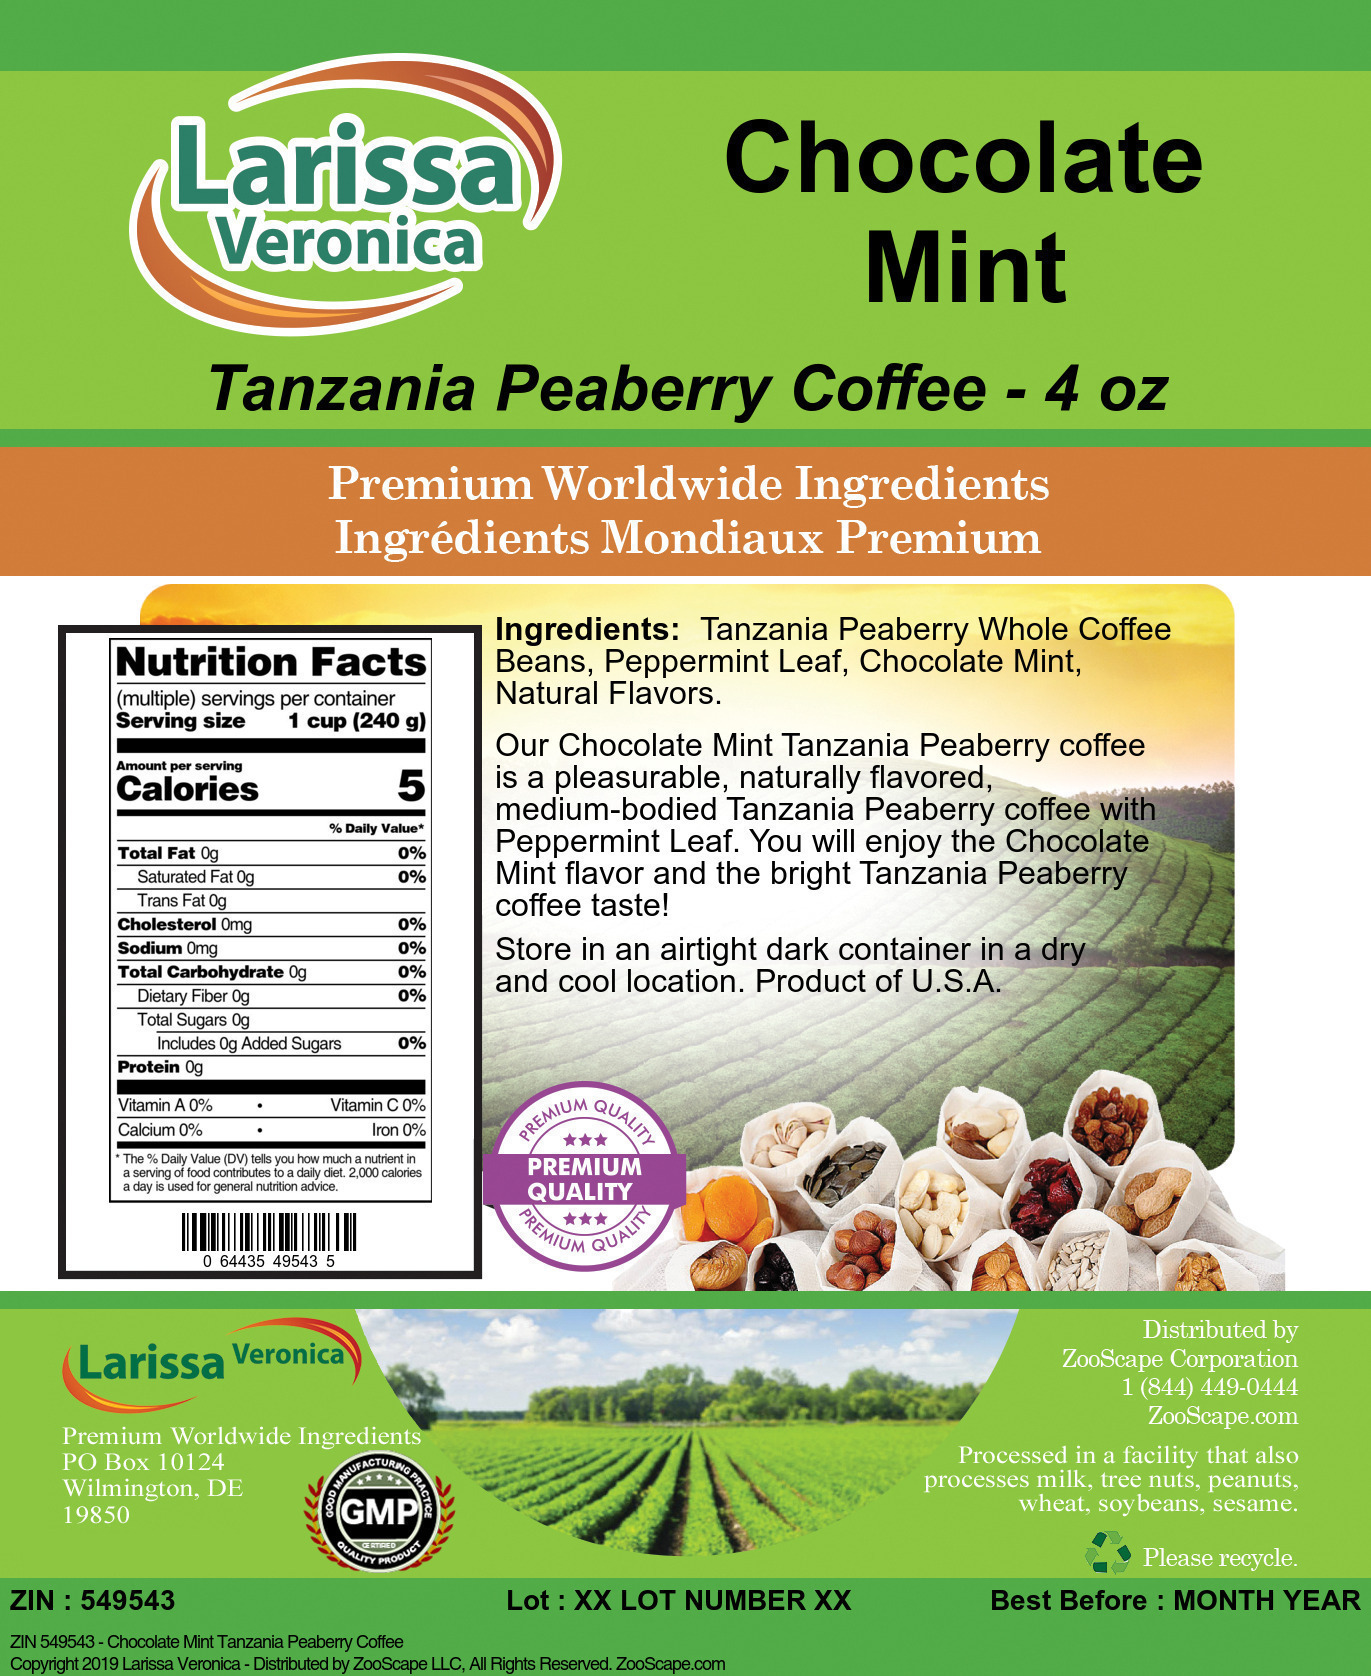 Chocolate Mint Tanzania Peaberry Coffee - Label